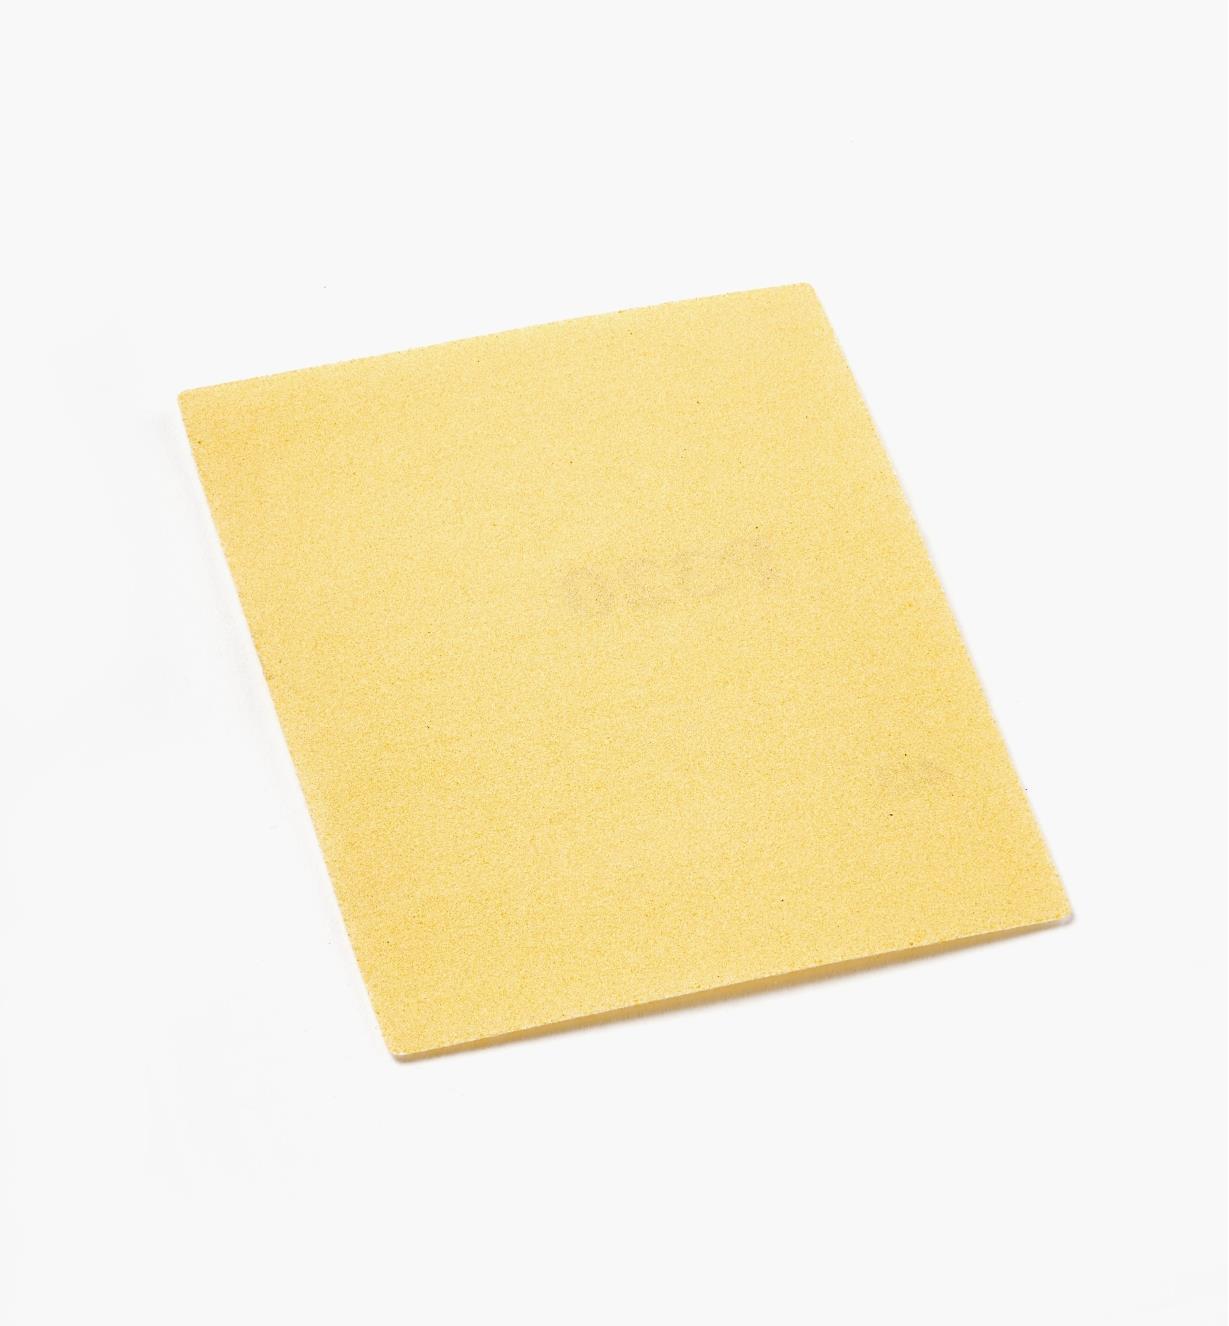 08K3458 - 320x Mirka Gold Grip Sheet, 3" × 4", ea.